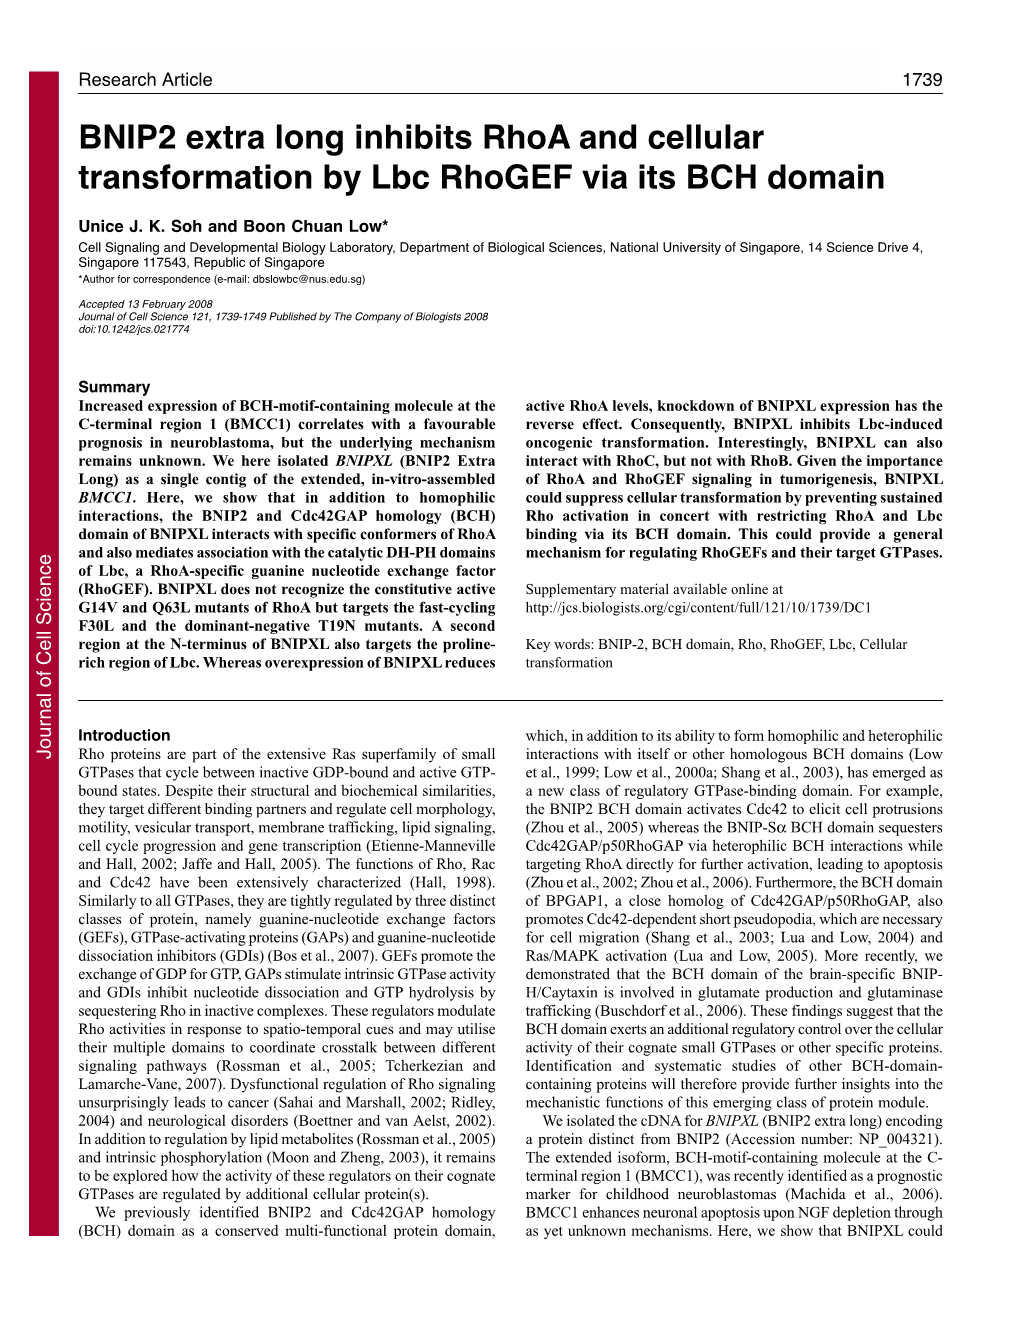 BNIP2 Extra Long Inhibits Rhoa and Cellular Transformation by Lbc Rhogef Via Its BCH Domain